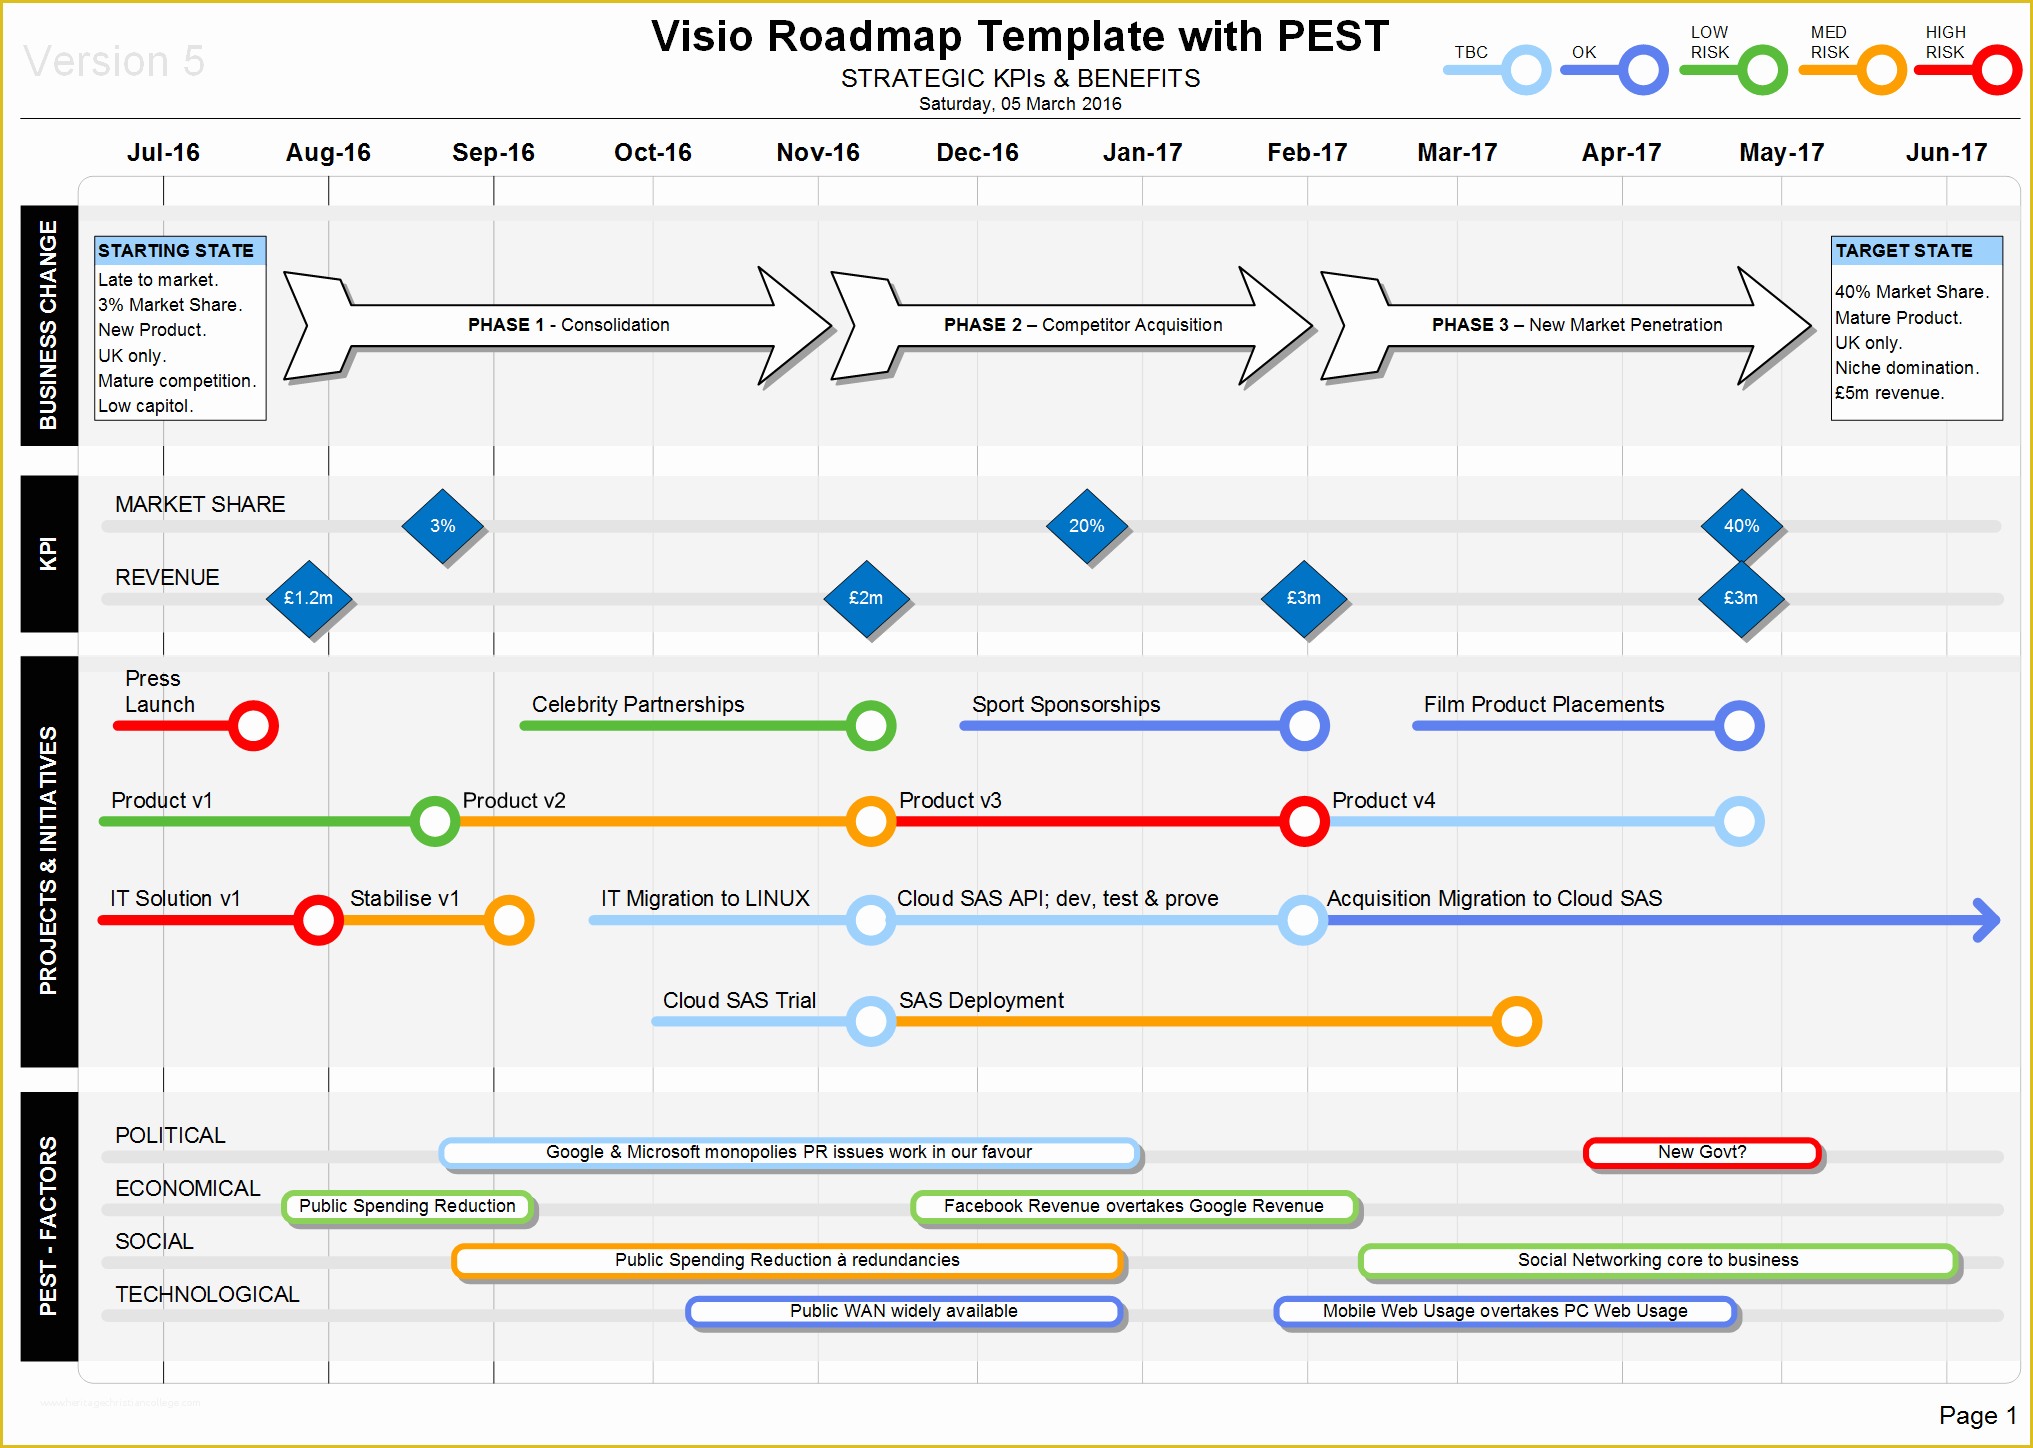 Free It Roadmap Template Of Visio Roadmap Pest Template Strategic Kpis & Benefits